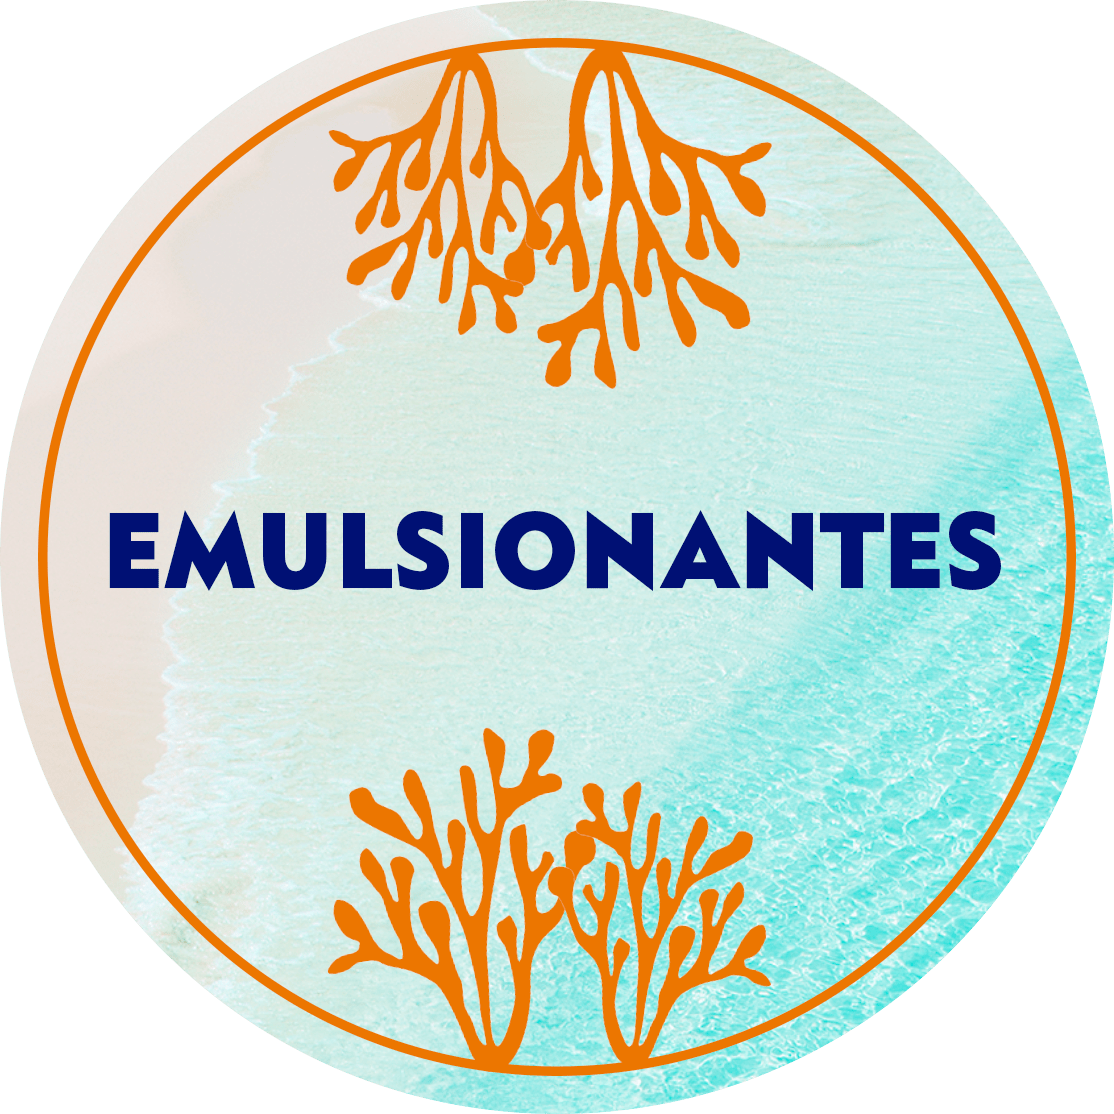 Emulsionantes